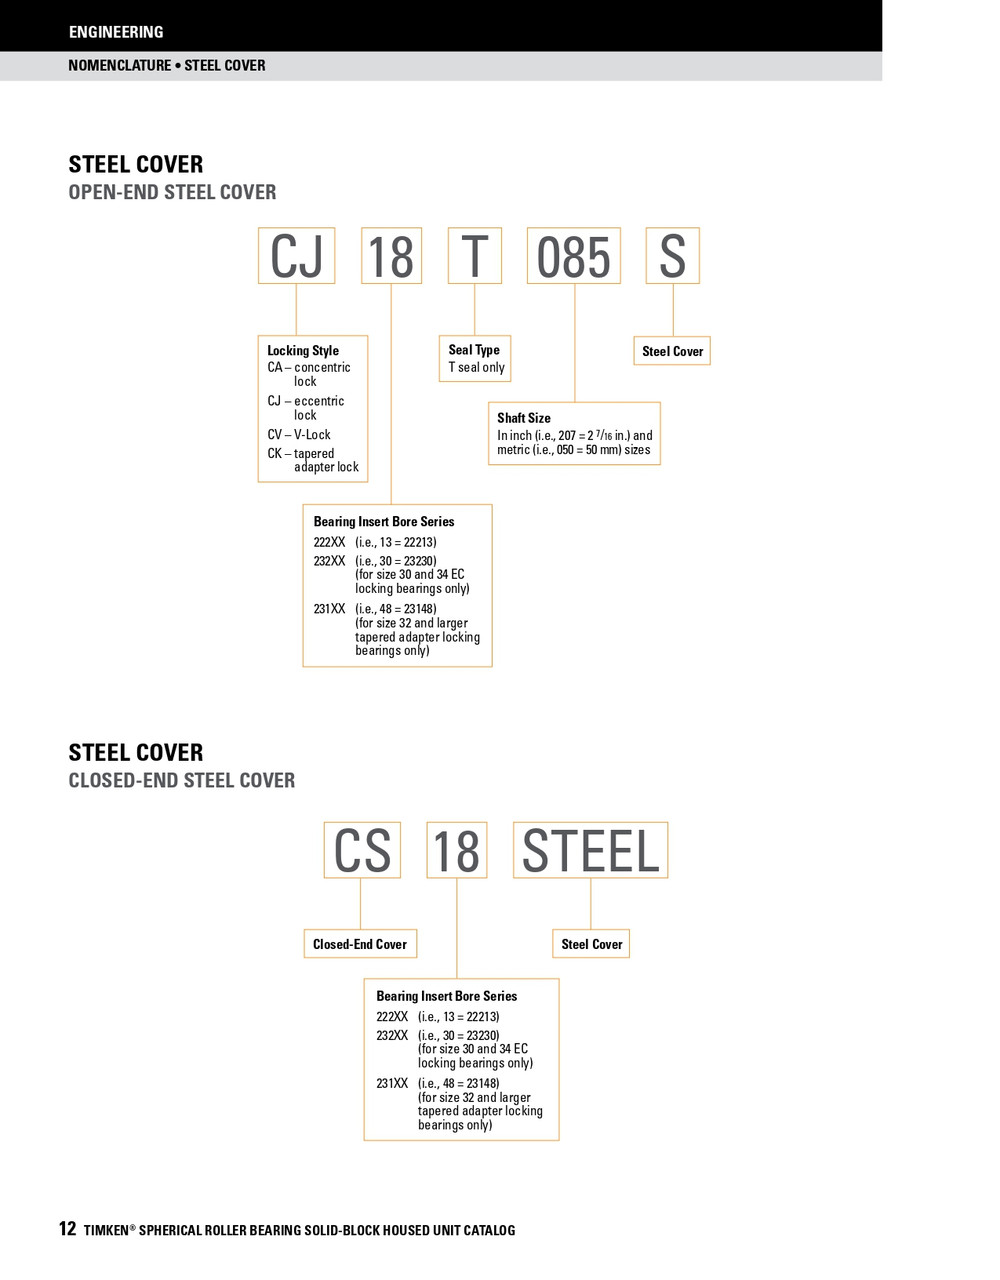 6-15/16" Timken SRB Steel Open End Cover w/Teflon Seal - Timken Eccentric Lock Type  CJ34T615S